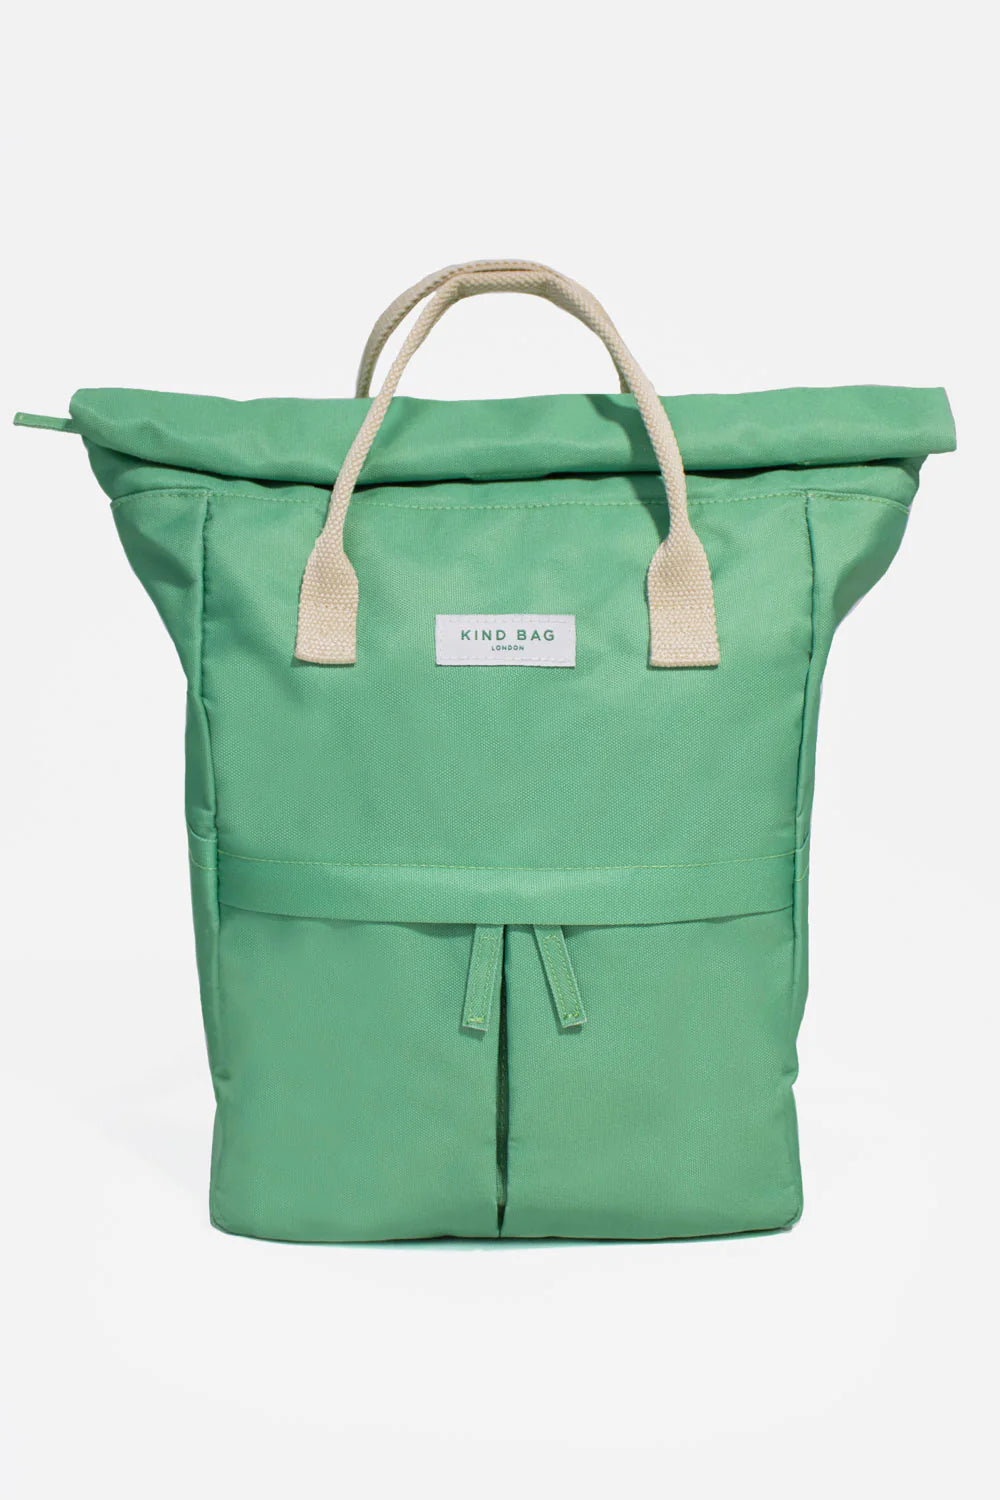 Kind Bag - Mint Green